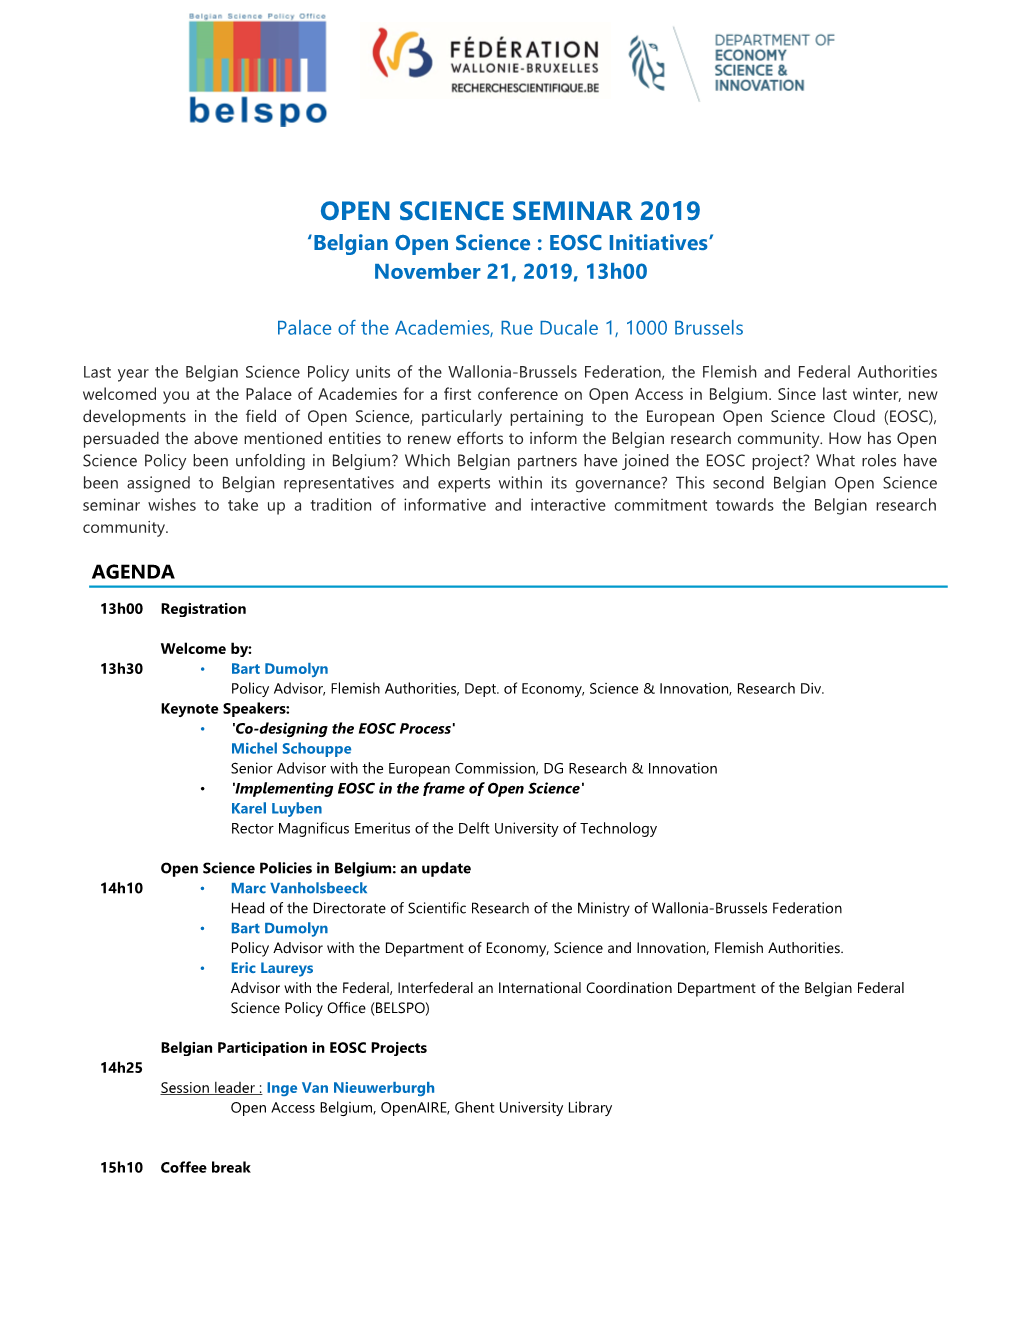 'Belgian Open Science : EOSC Initiatives' November 21, 2019, 13H00